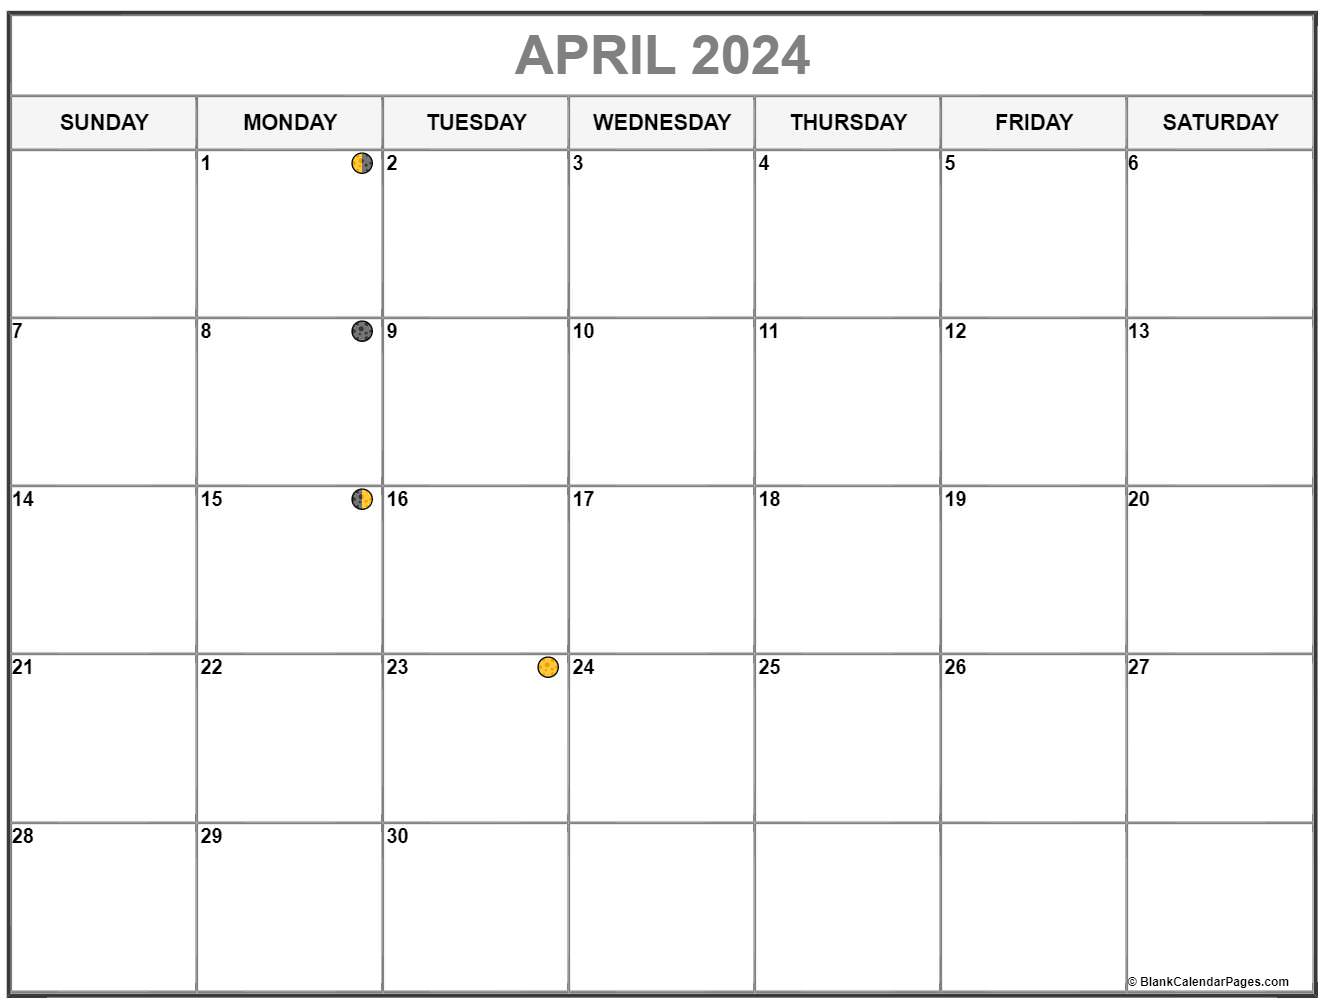 Lunar Calendar April 2022 April 2022 Lunar Calendar | Moon Phase Calendar